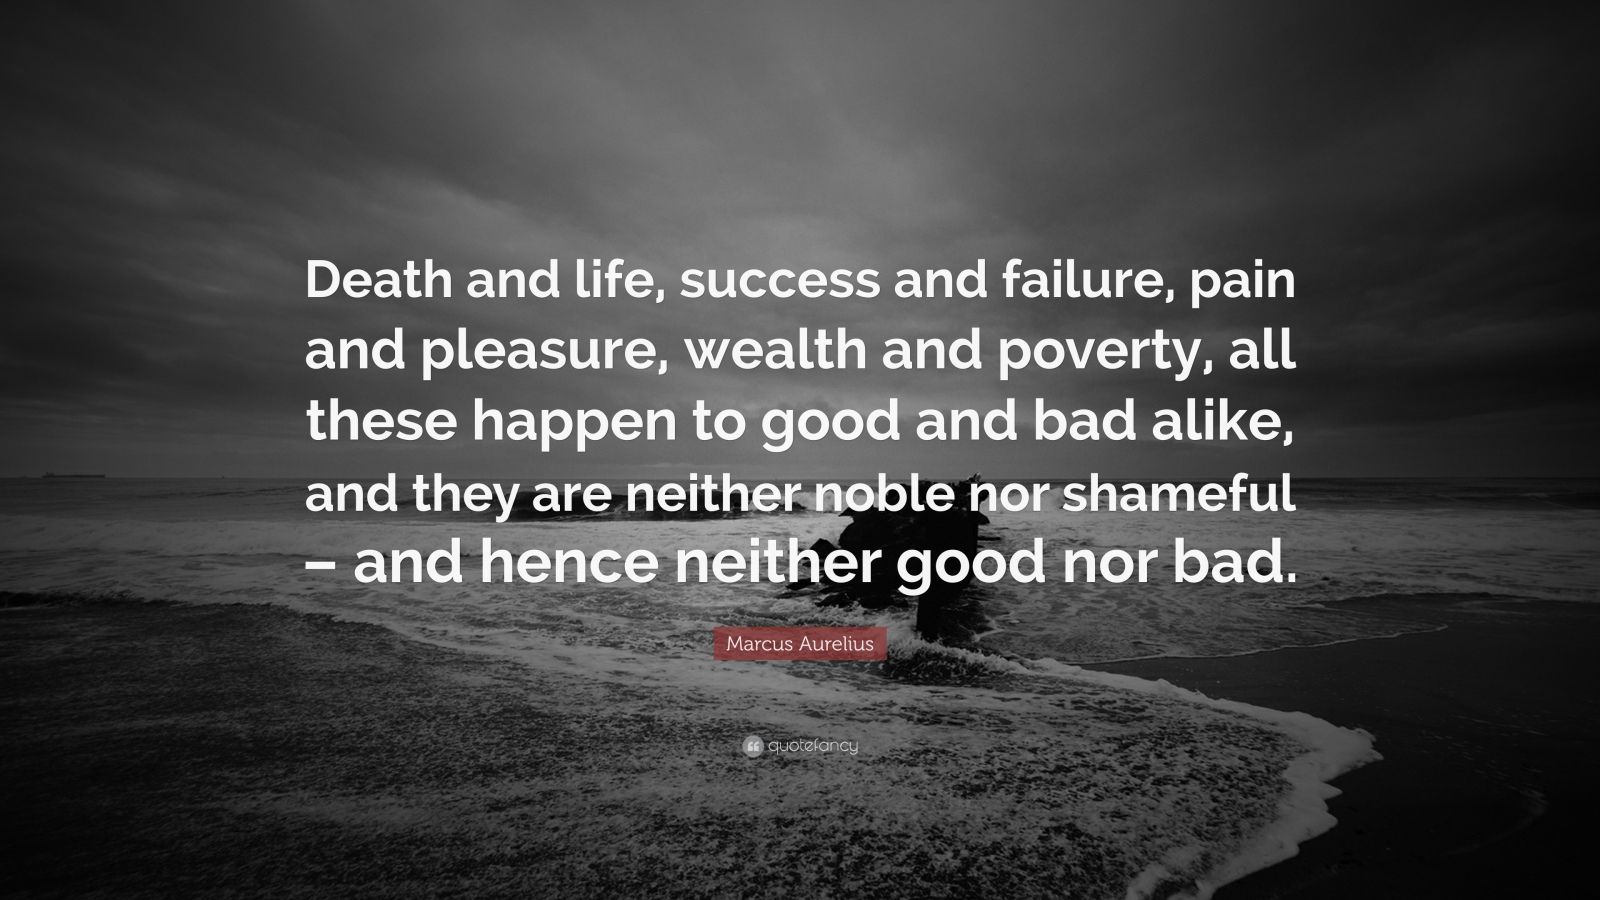 Marcus Aurelius Quote “Death and life success and failure pain and pleasure